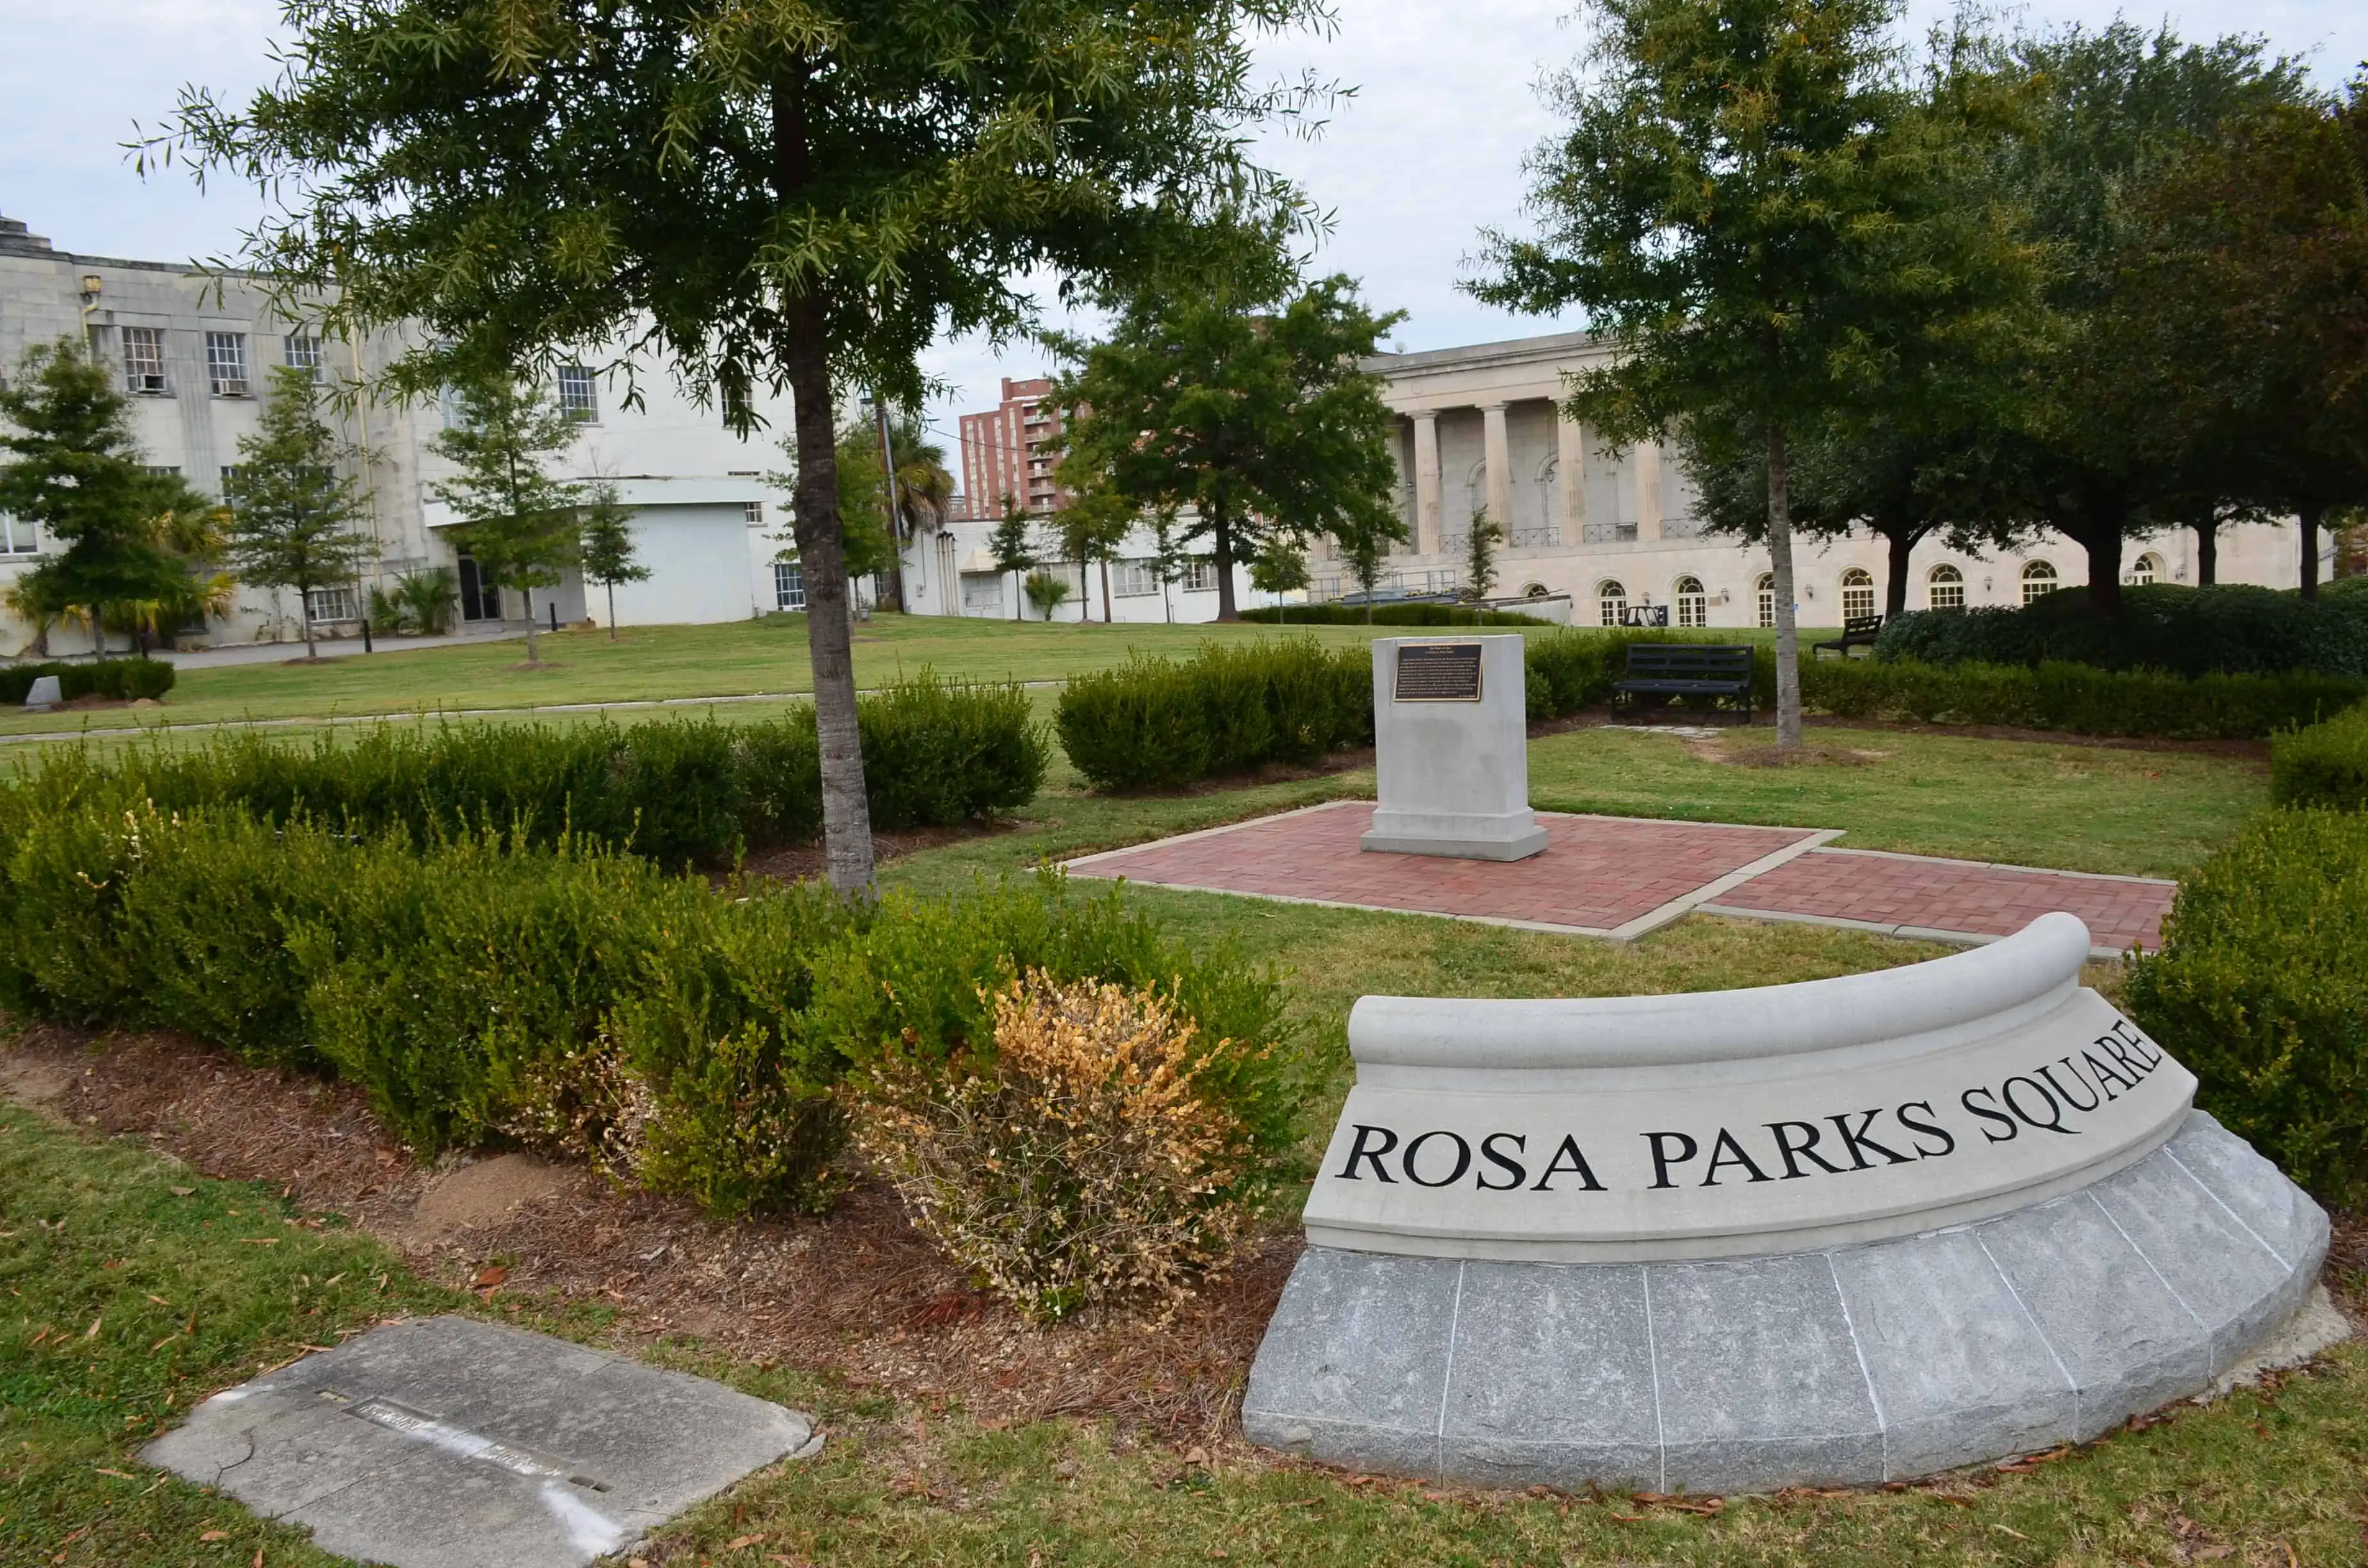 Rosa Parks Square in Macon, Georgia